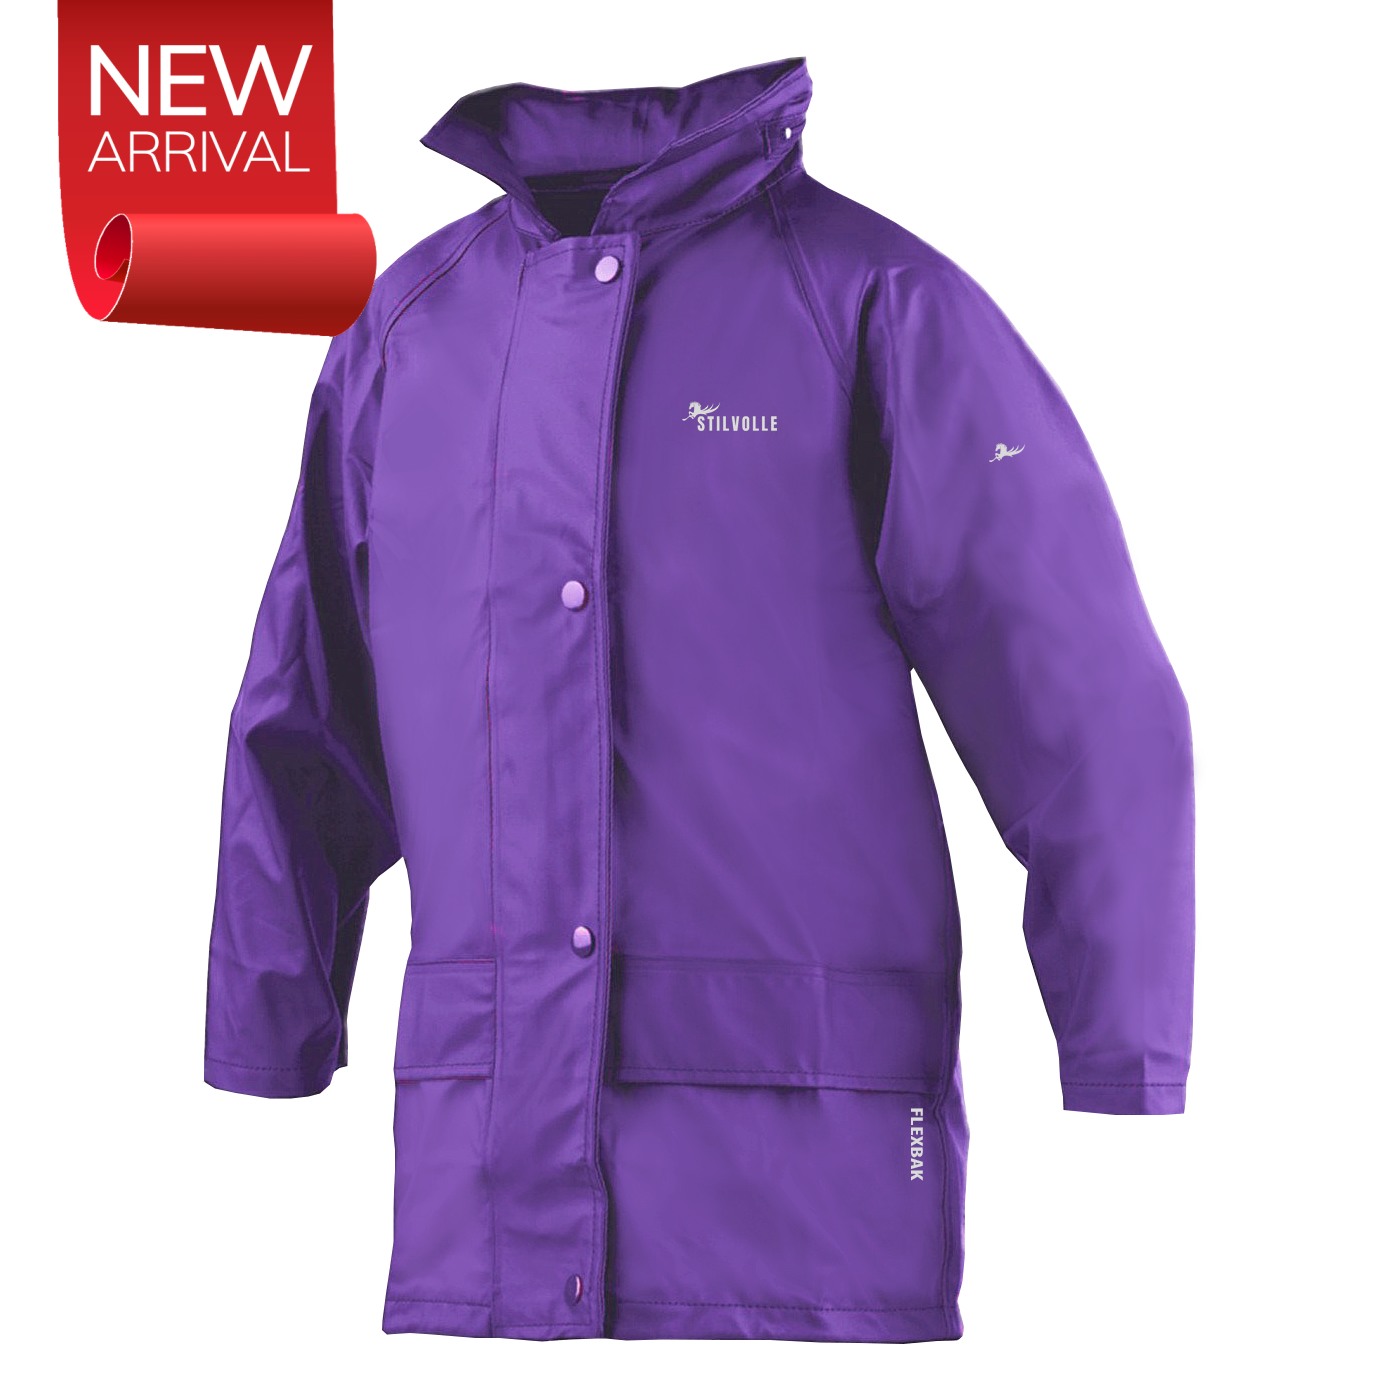 Stilvolle Kids Raincoat 100% Waterproof Hooded Purple Size 4 to 14